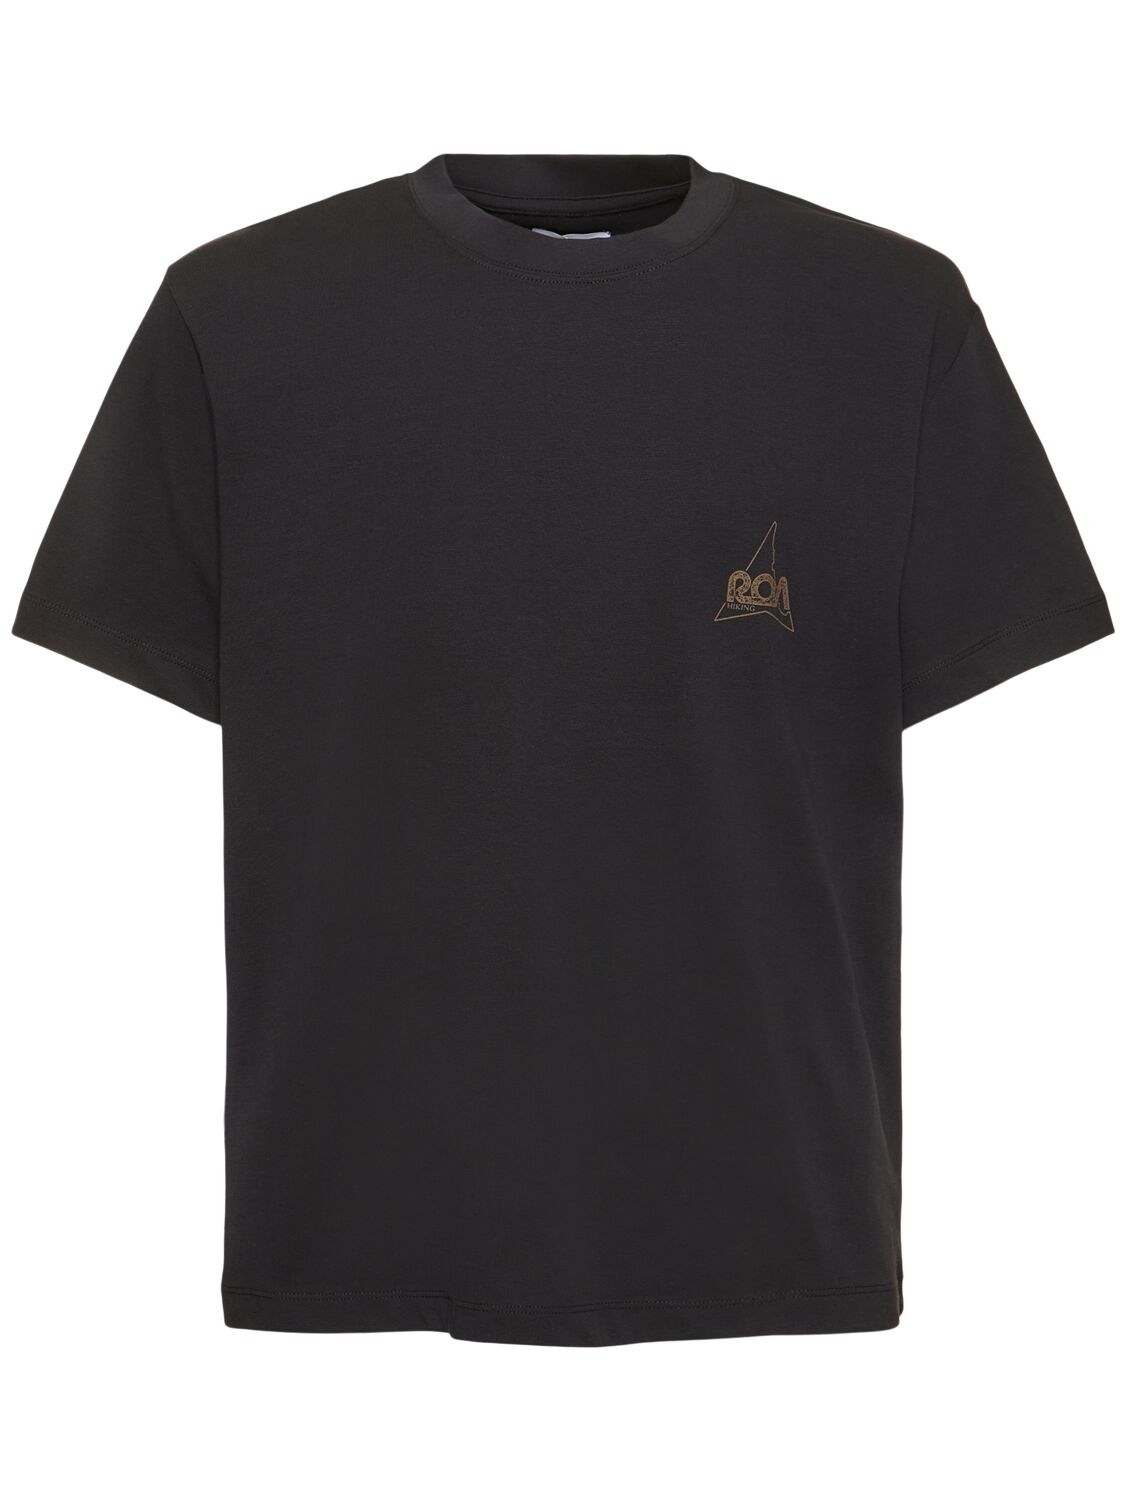 Roa Cotton Crewneck T-shirt In Black